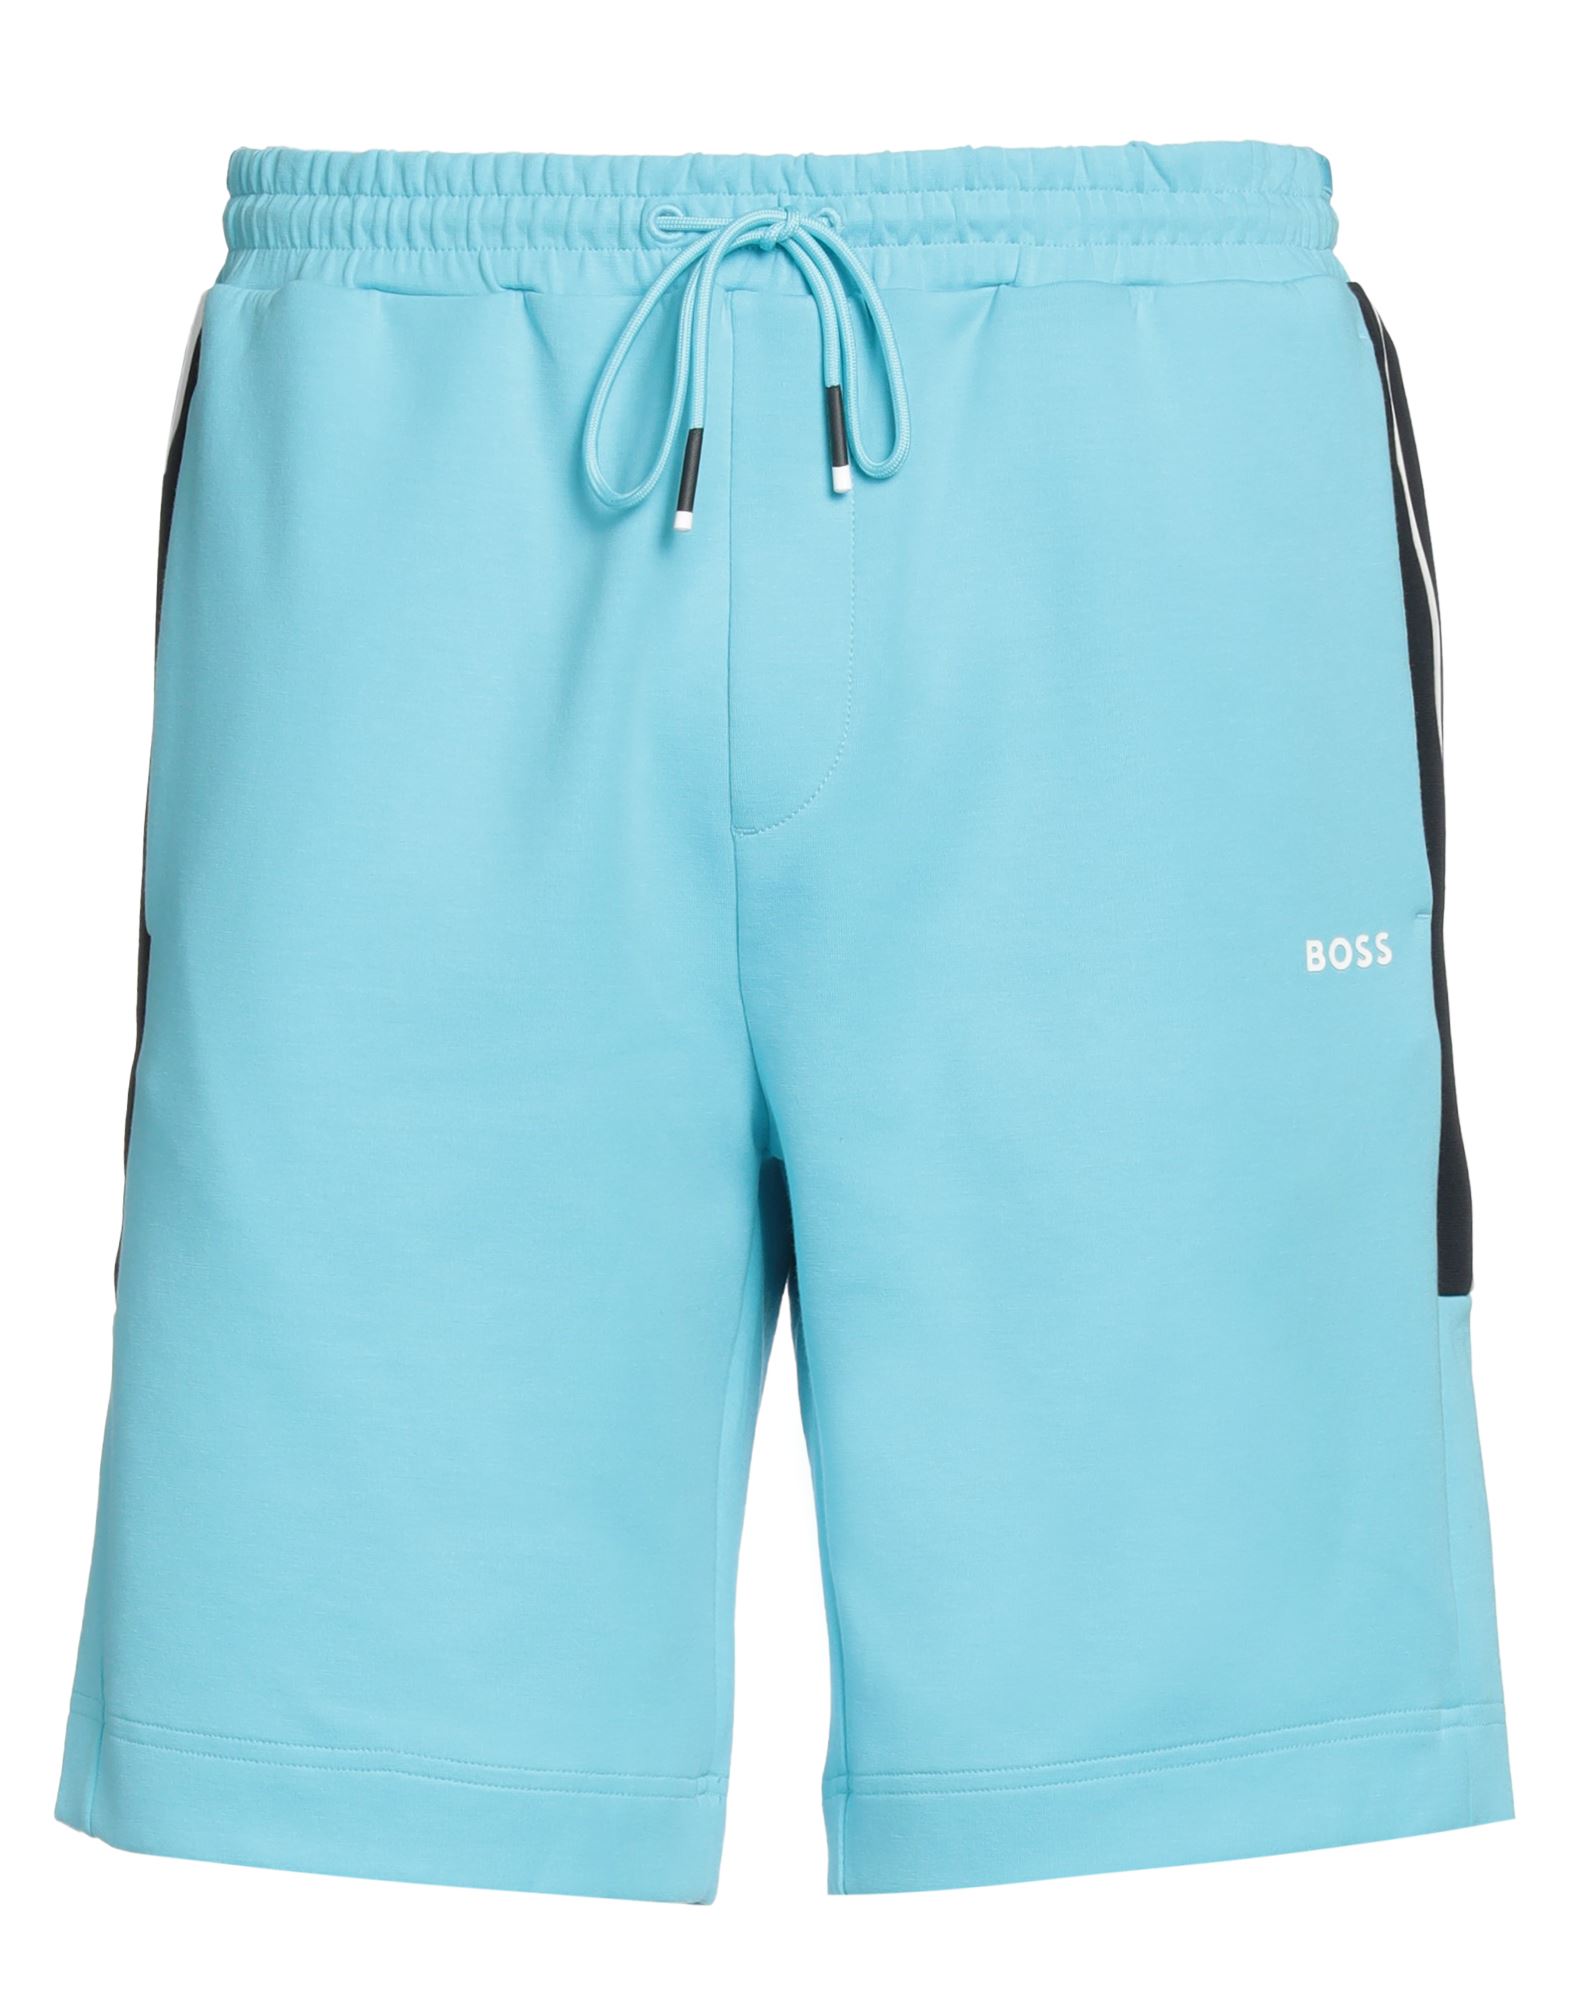 BOSS Shorts & Bermudashorts Herren Himmelblau von BOSS